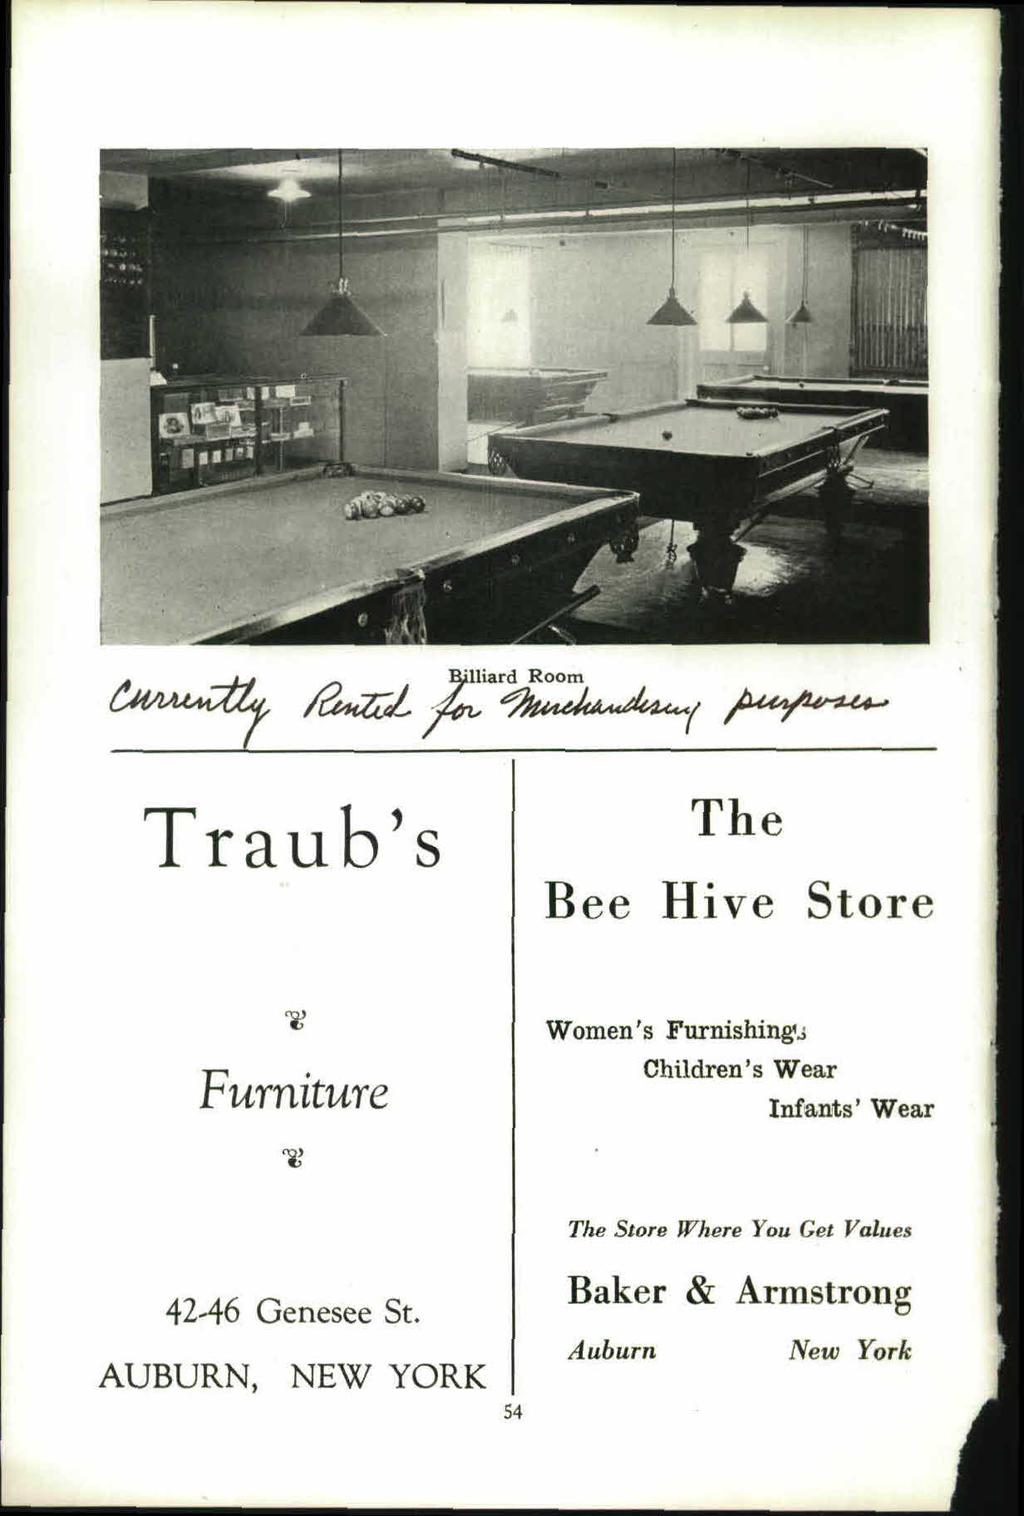 i a, i z z. A l tl i a rd 1 ; z:v 1ot4 Traub's The Bee Hive Store v Furniture 1; 42-46 Genesee St.